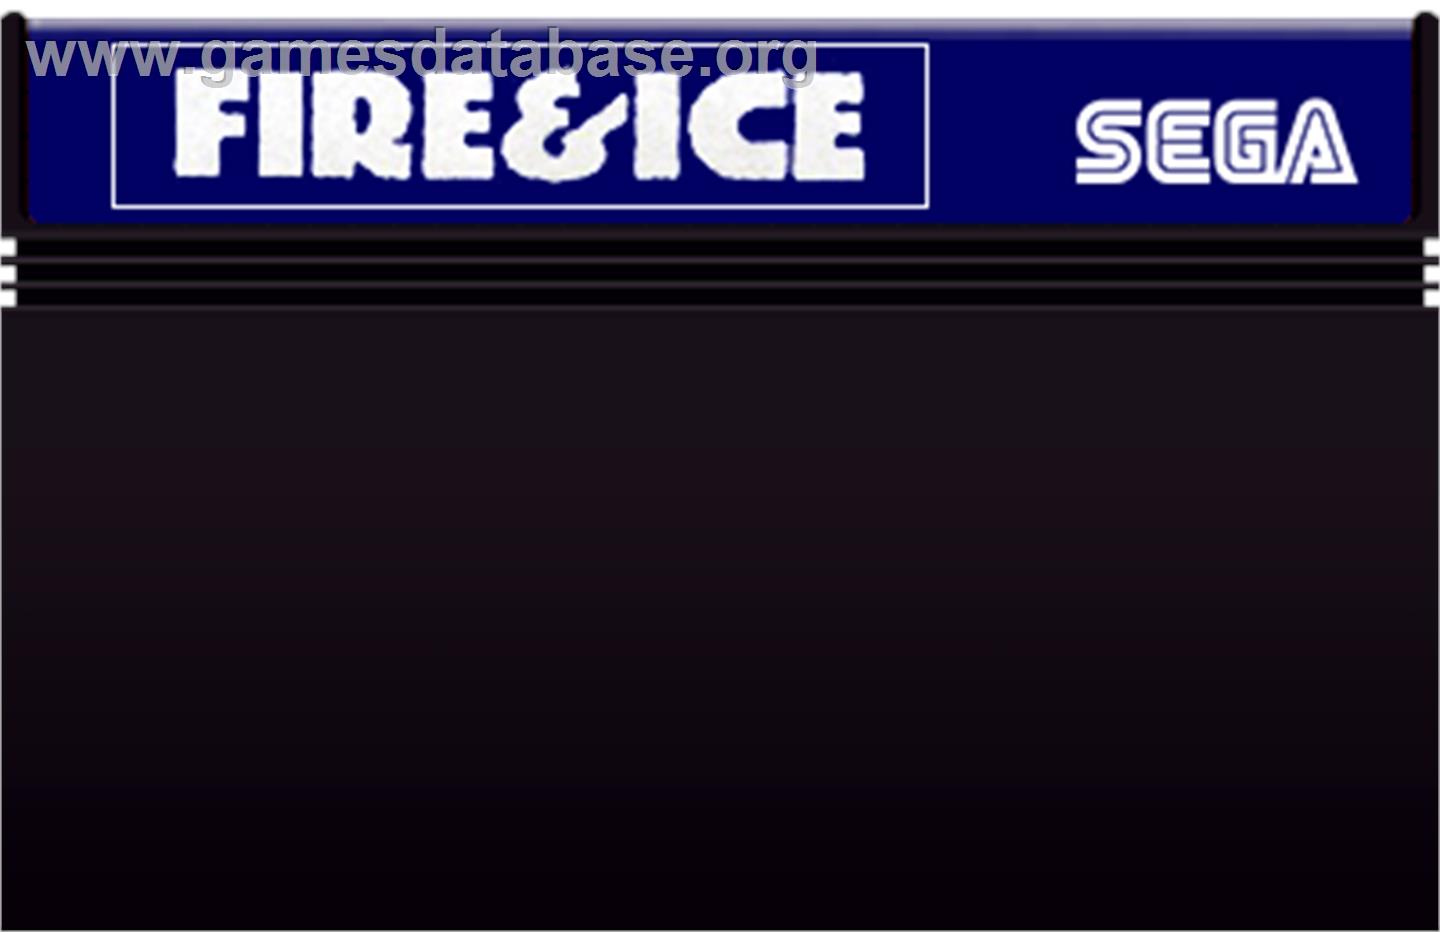 Fire and Ice - Sega Master System - Artwork - Cartridge